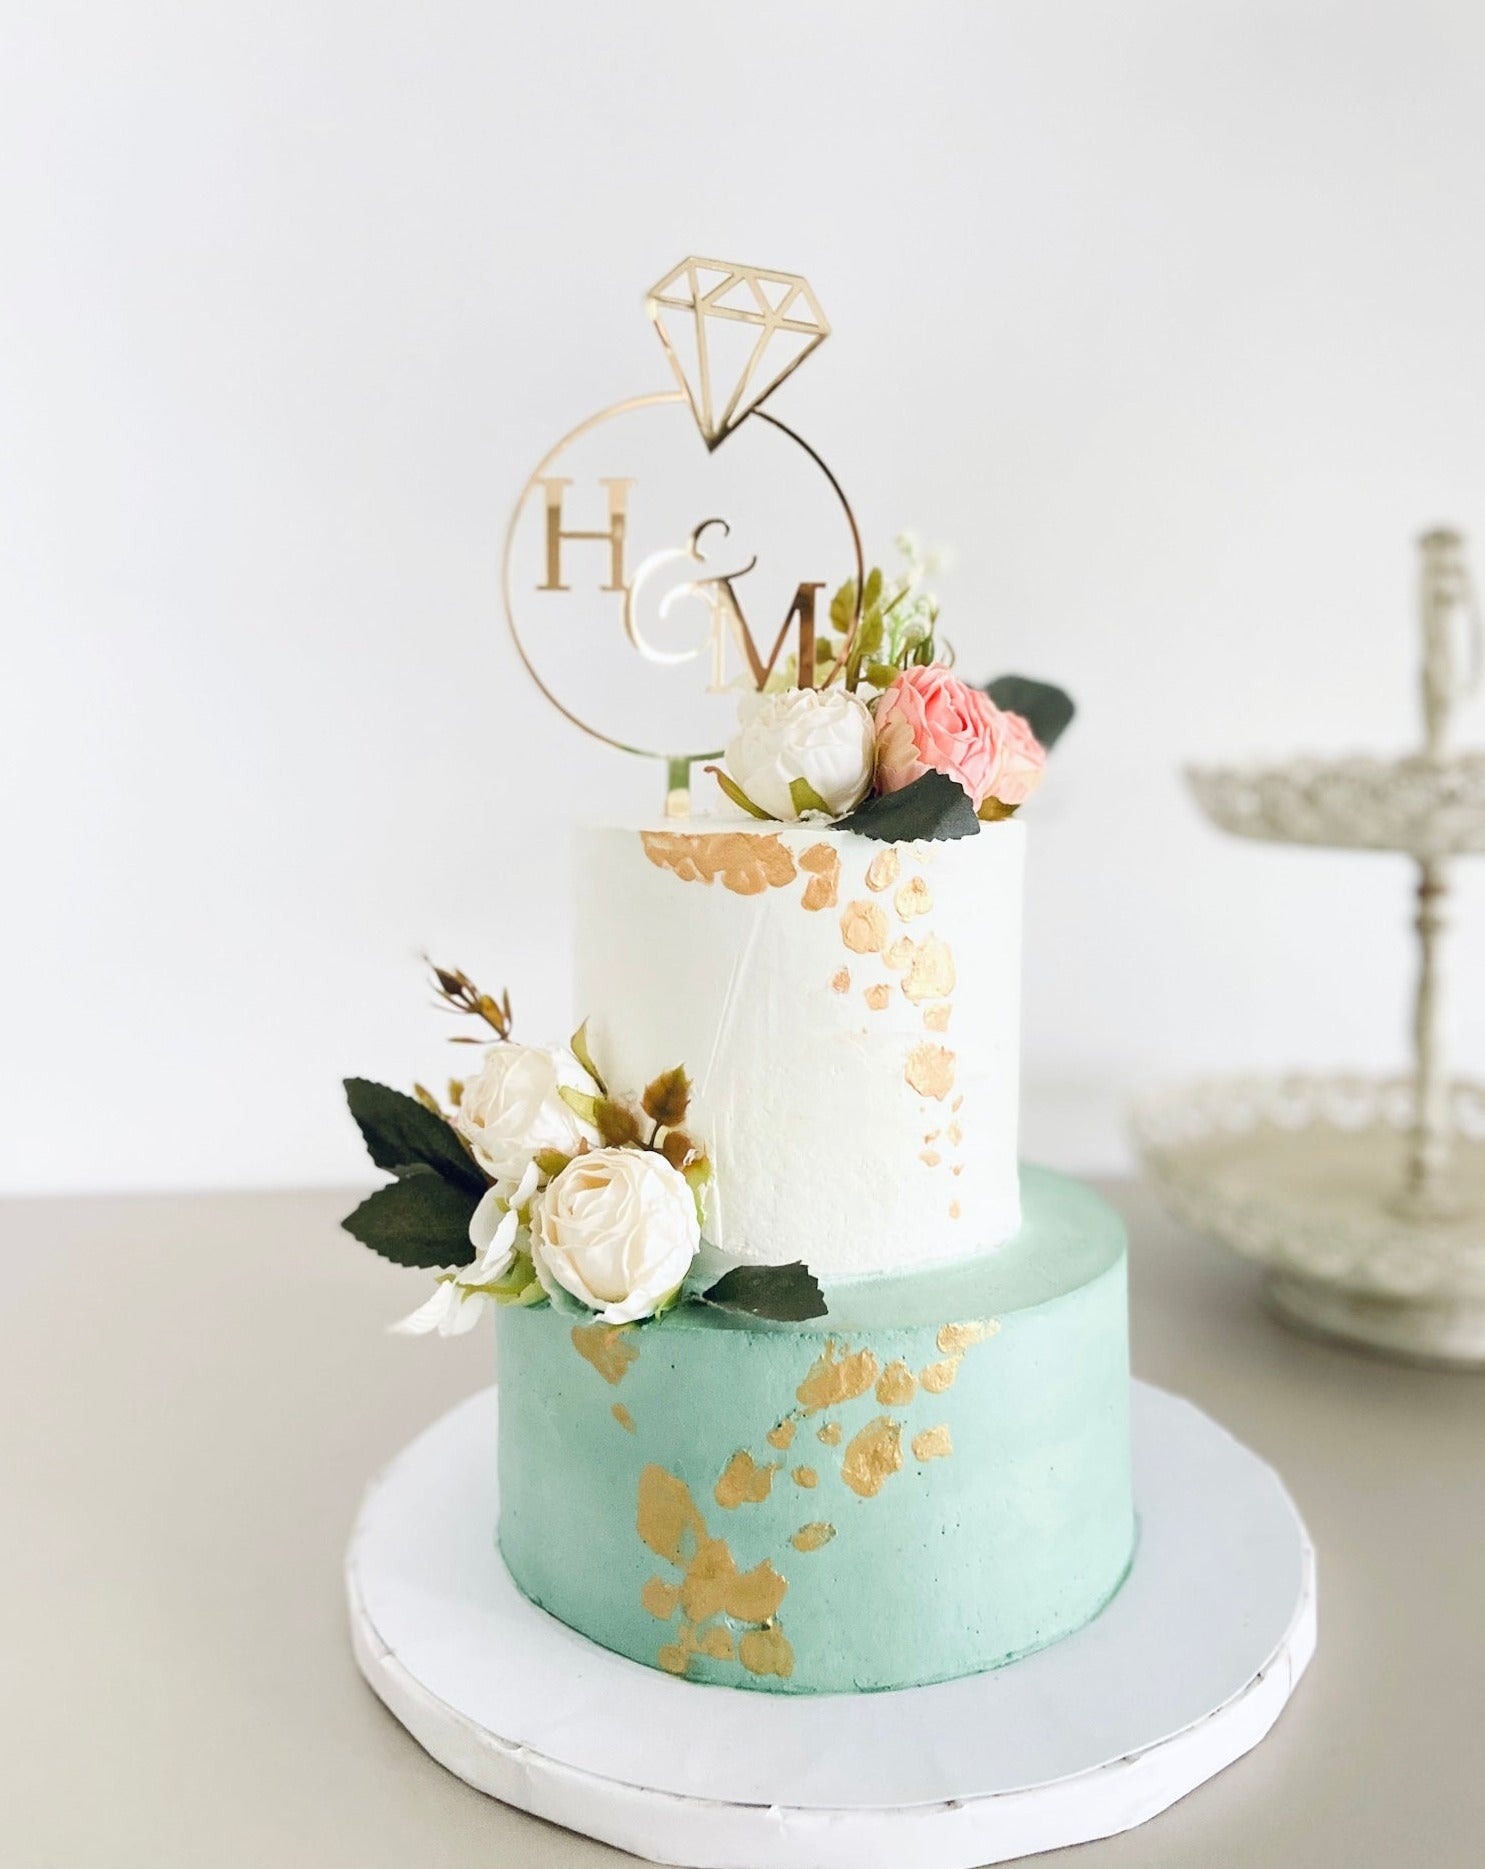 Engagement Cake Designs & Images